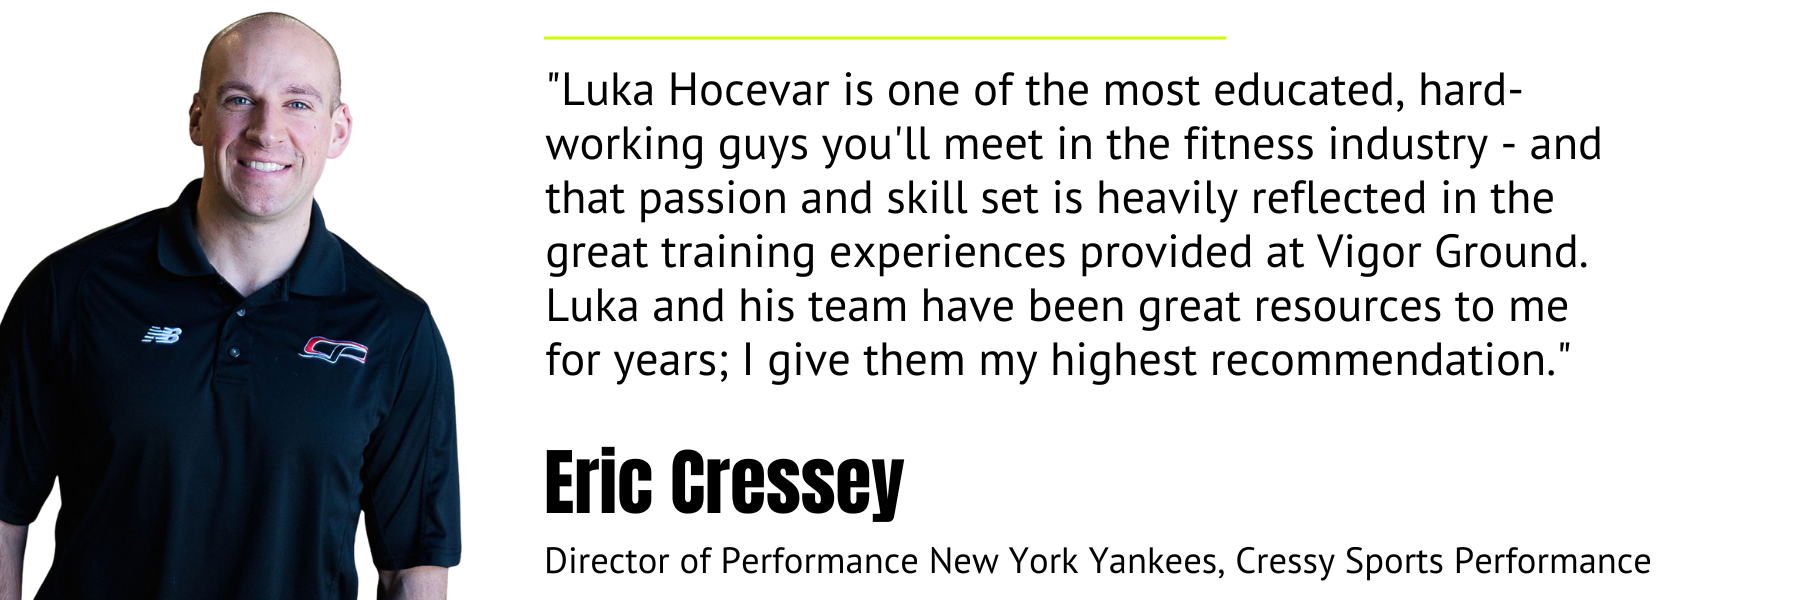 Eric Cressey testimonial for Luka Hocevar